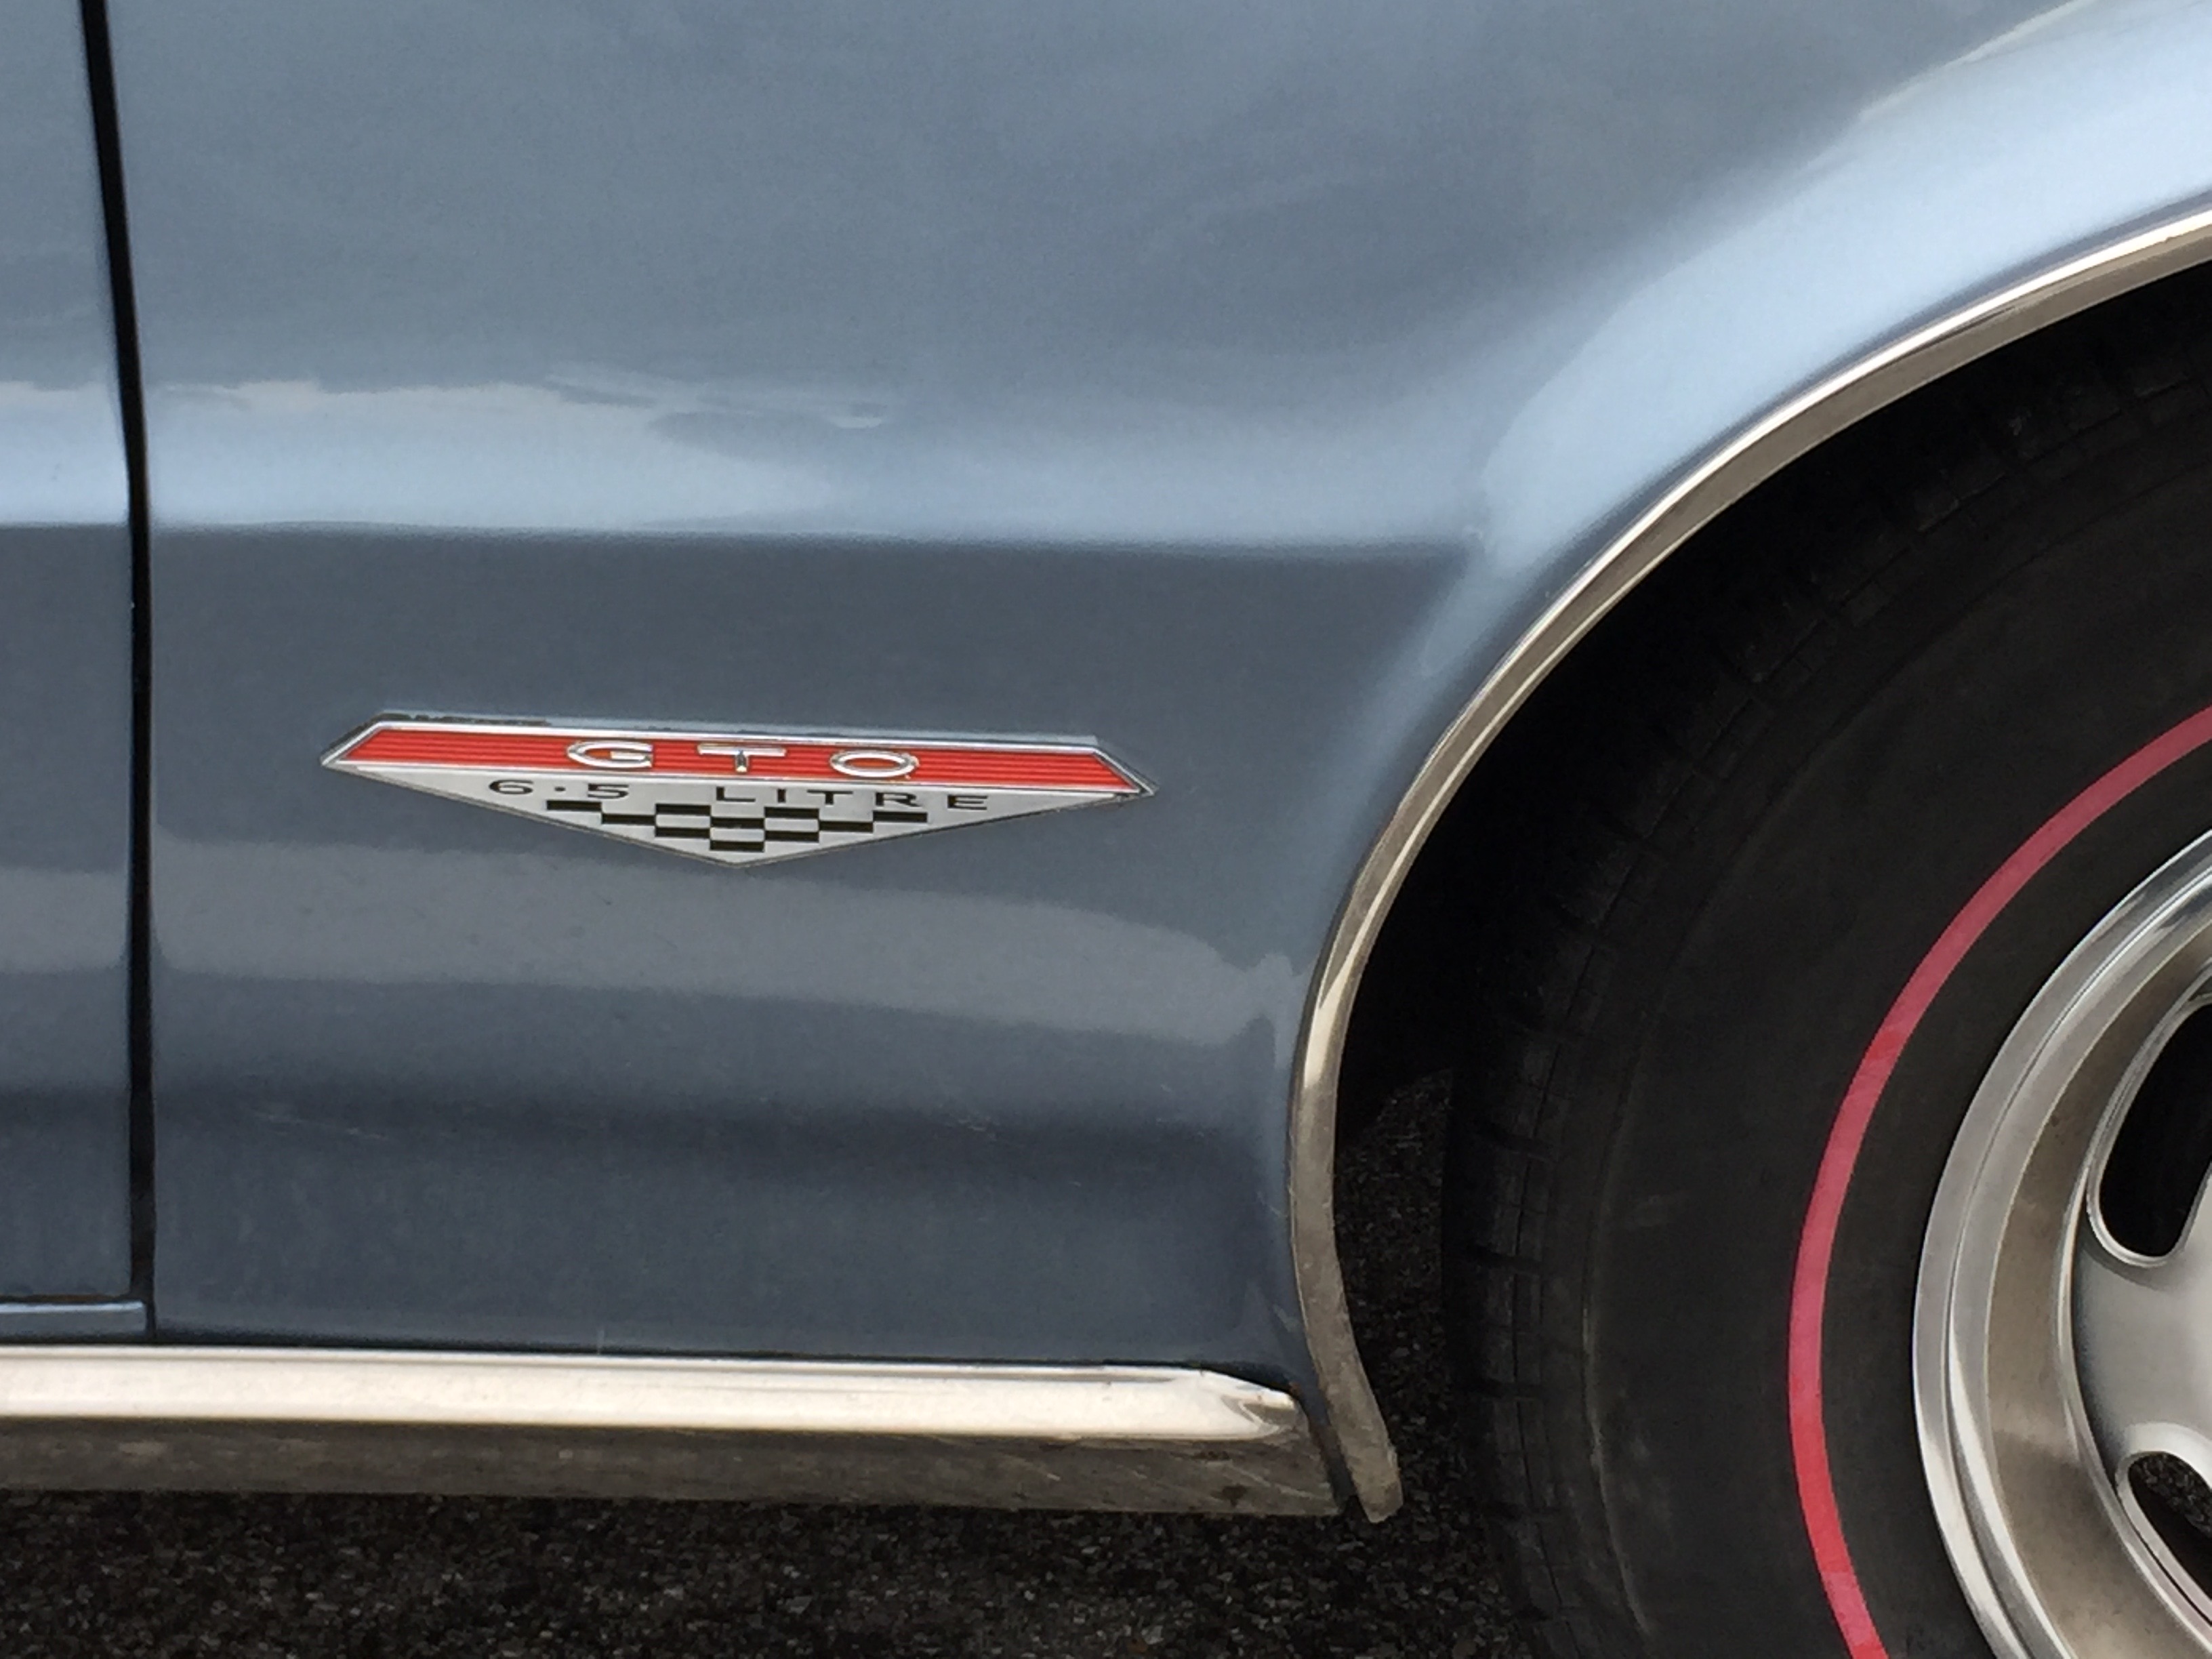 Curbside Classic: 1968 Pontiac GTO - Redpop! - Curbside Classic